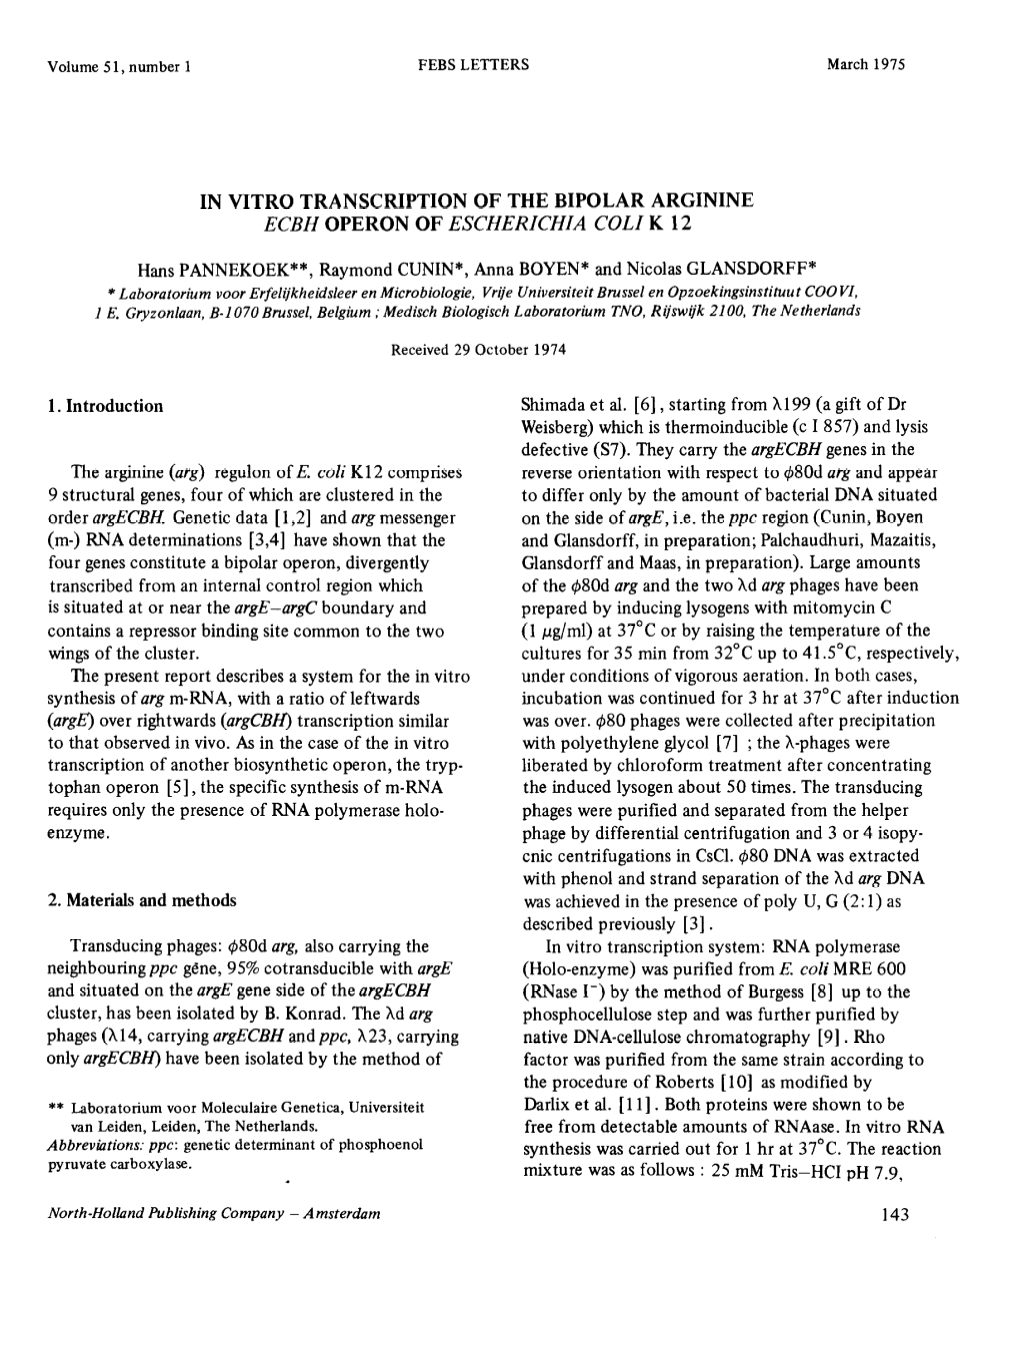 In Vitro Transcription of the Bipolar Arginine Ecbh Operon of Escherichia Coli K 12